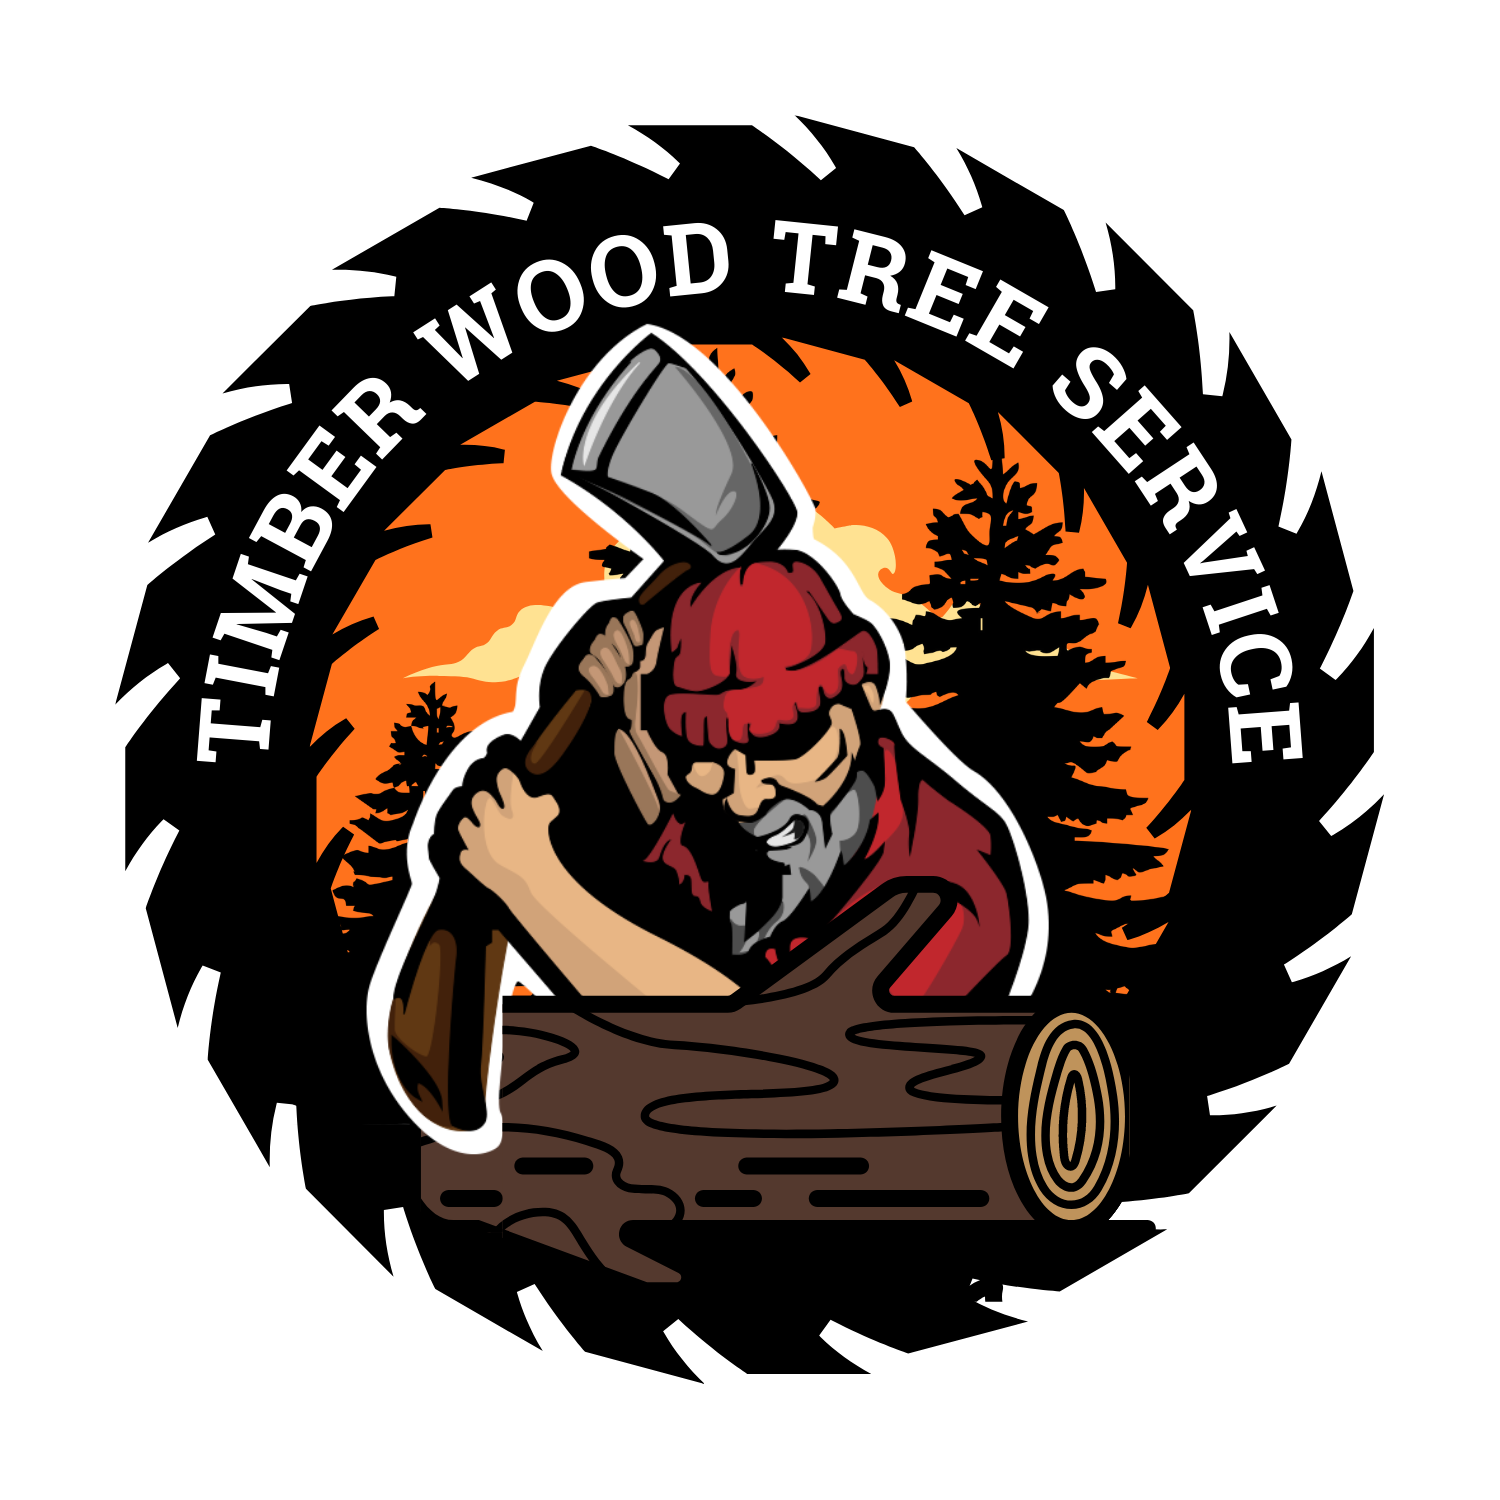 Timber Wood Tree Service